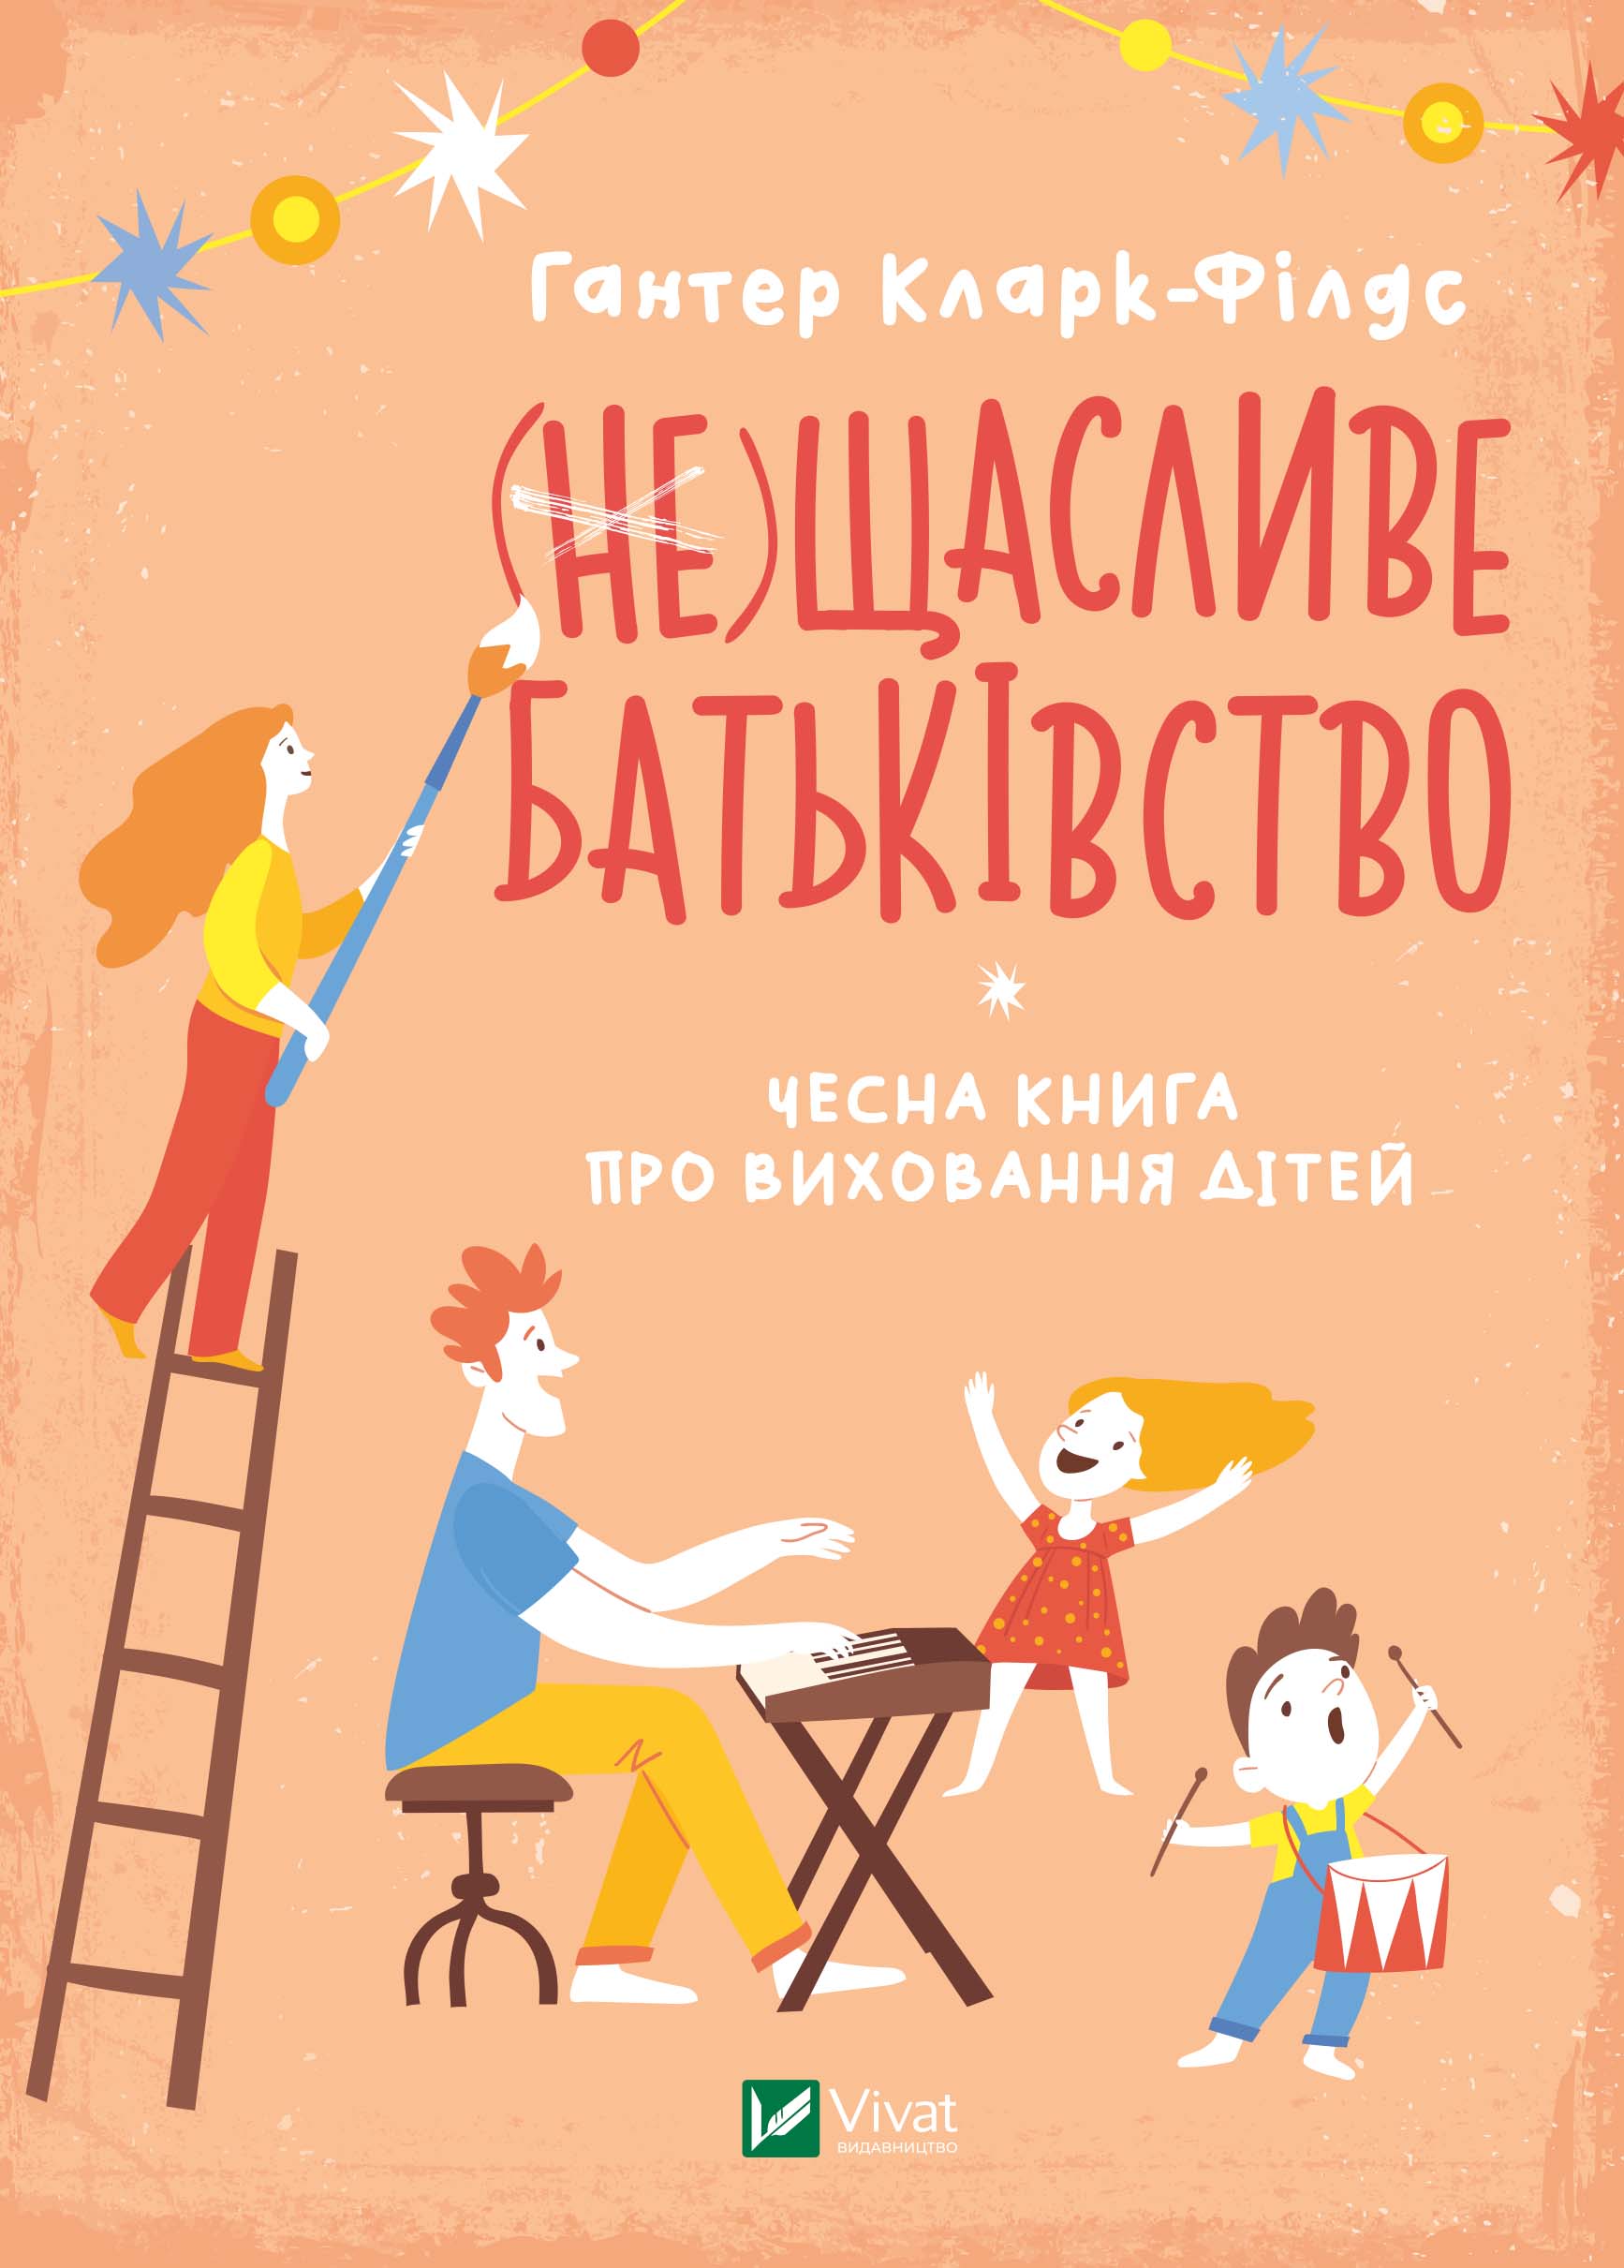 (Не) Щасливе батьківство (Електронна книга) - "(Не) Щасливе батьківство" (Електронна книга)